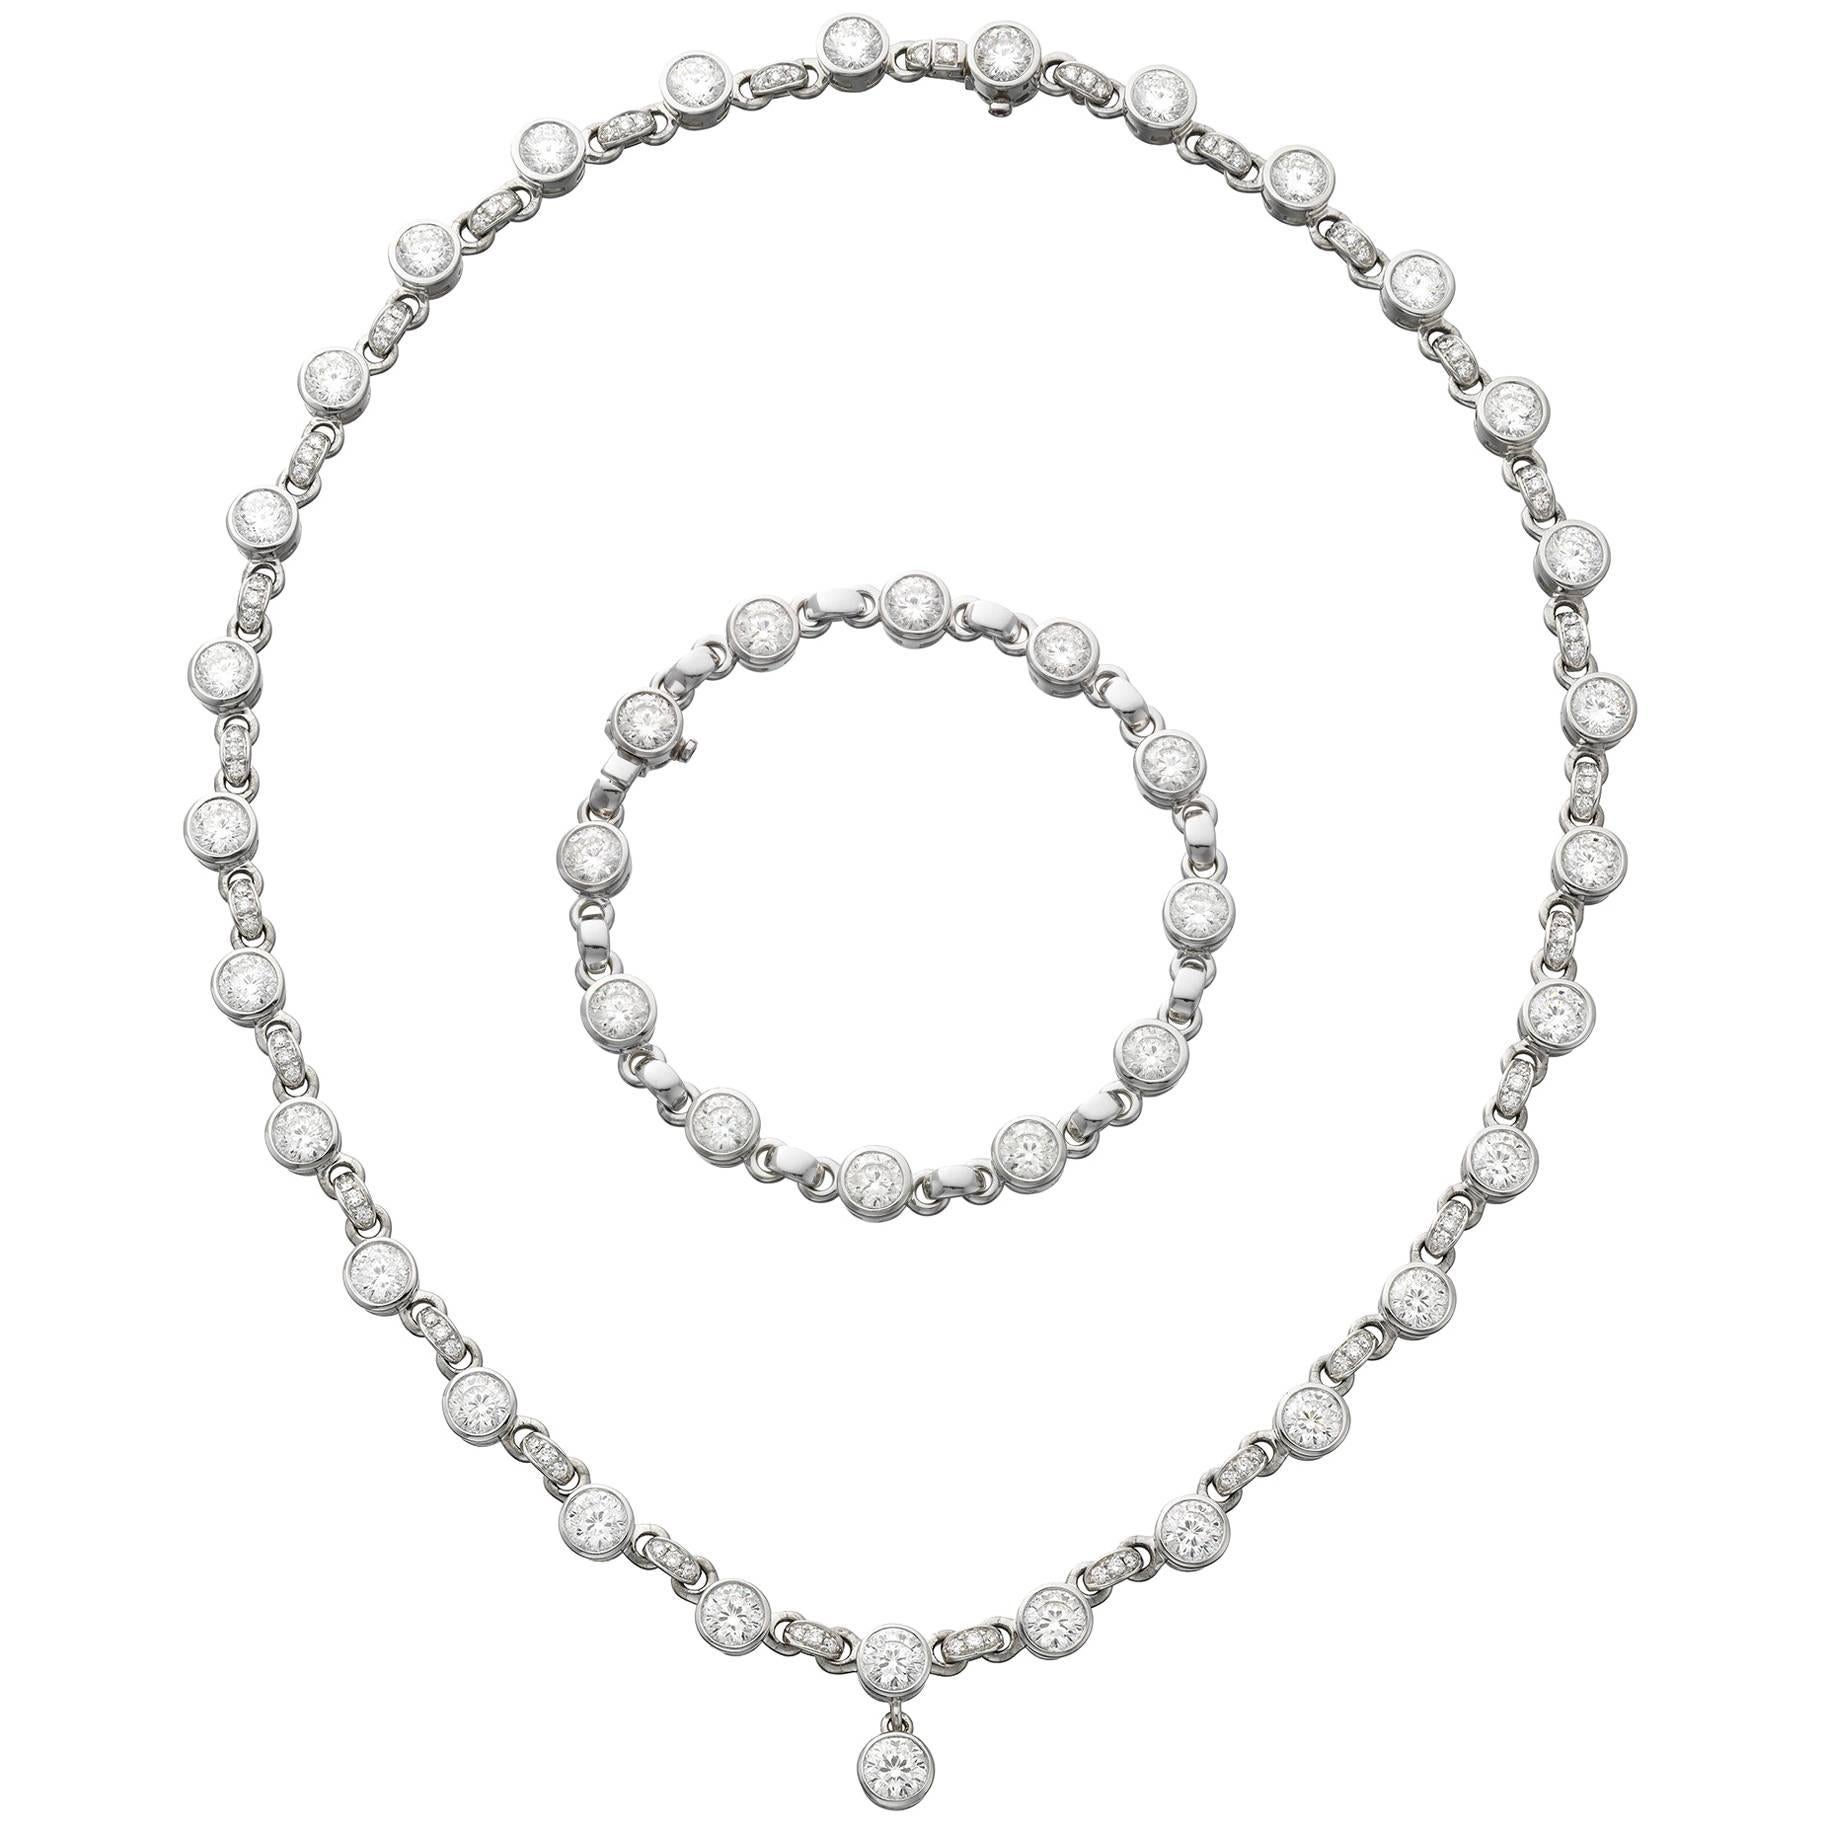 Roberto Coin Italian Bezel-Set Diamond Necklace and Bracelet Set